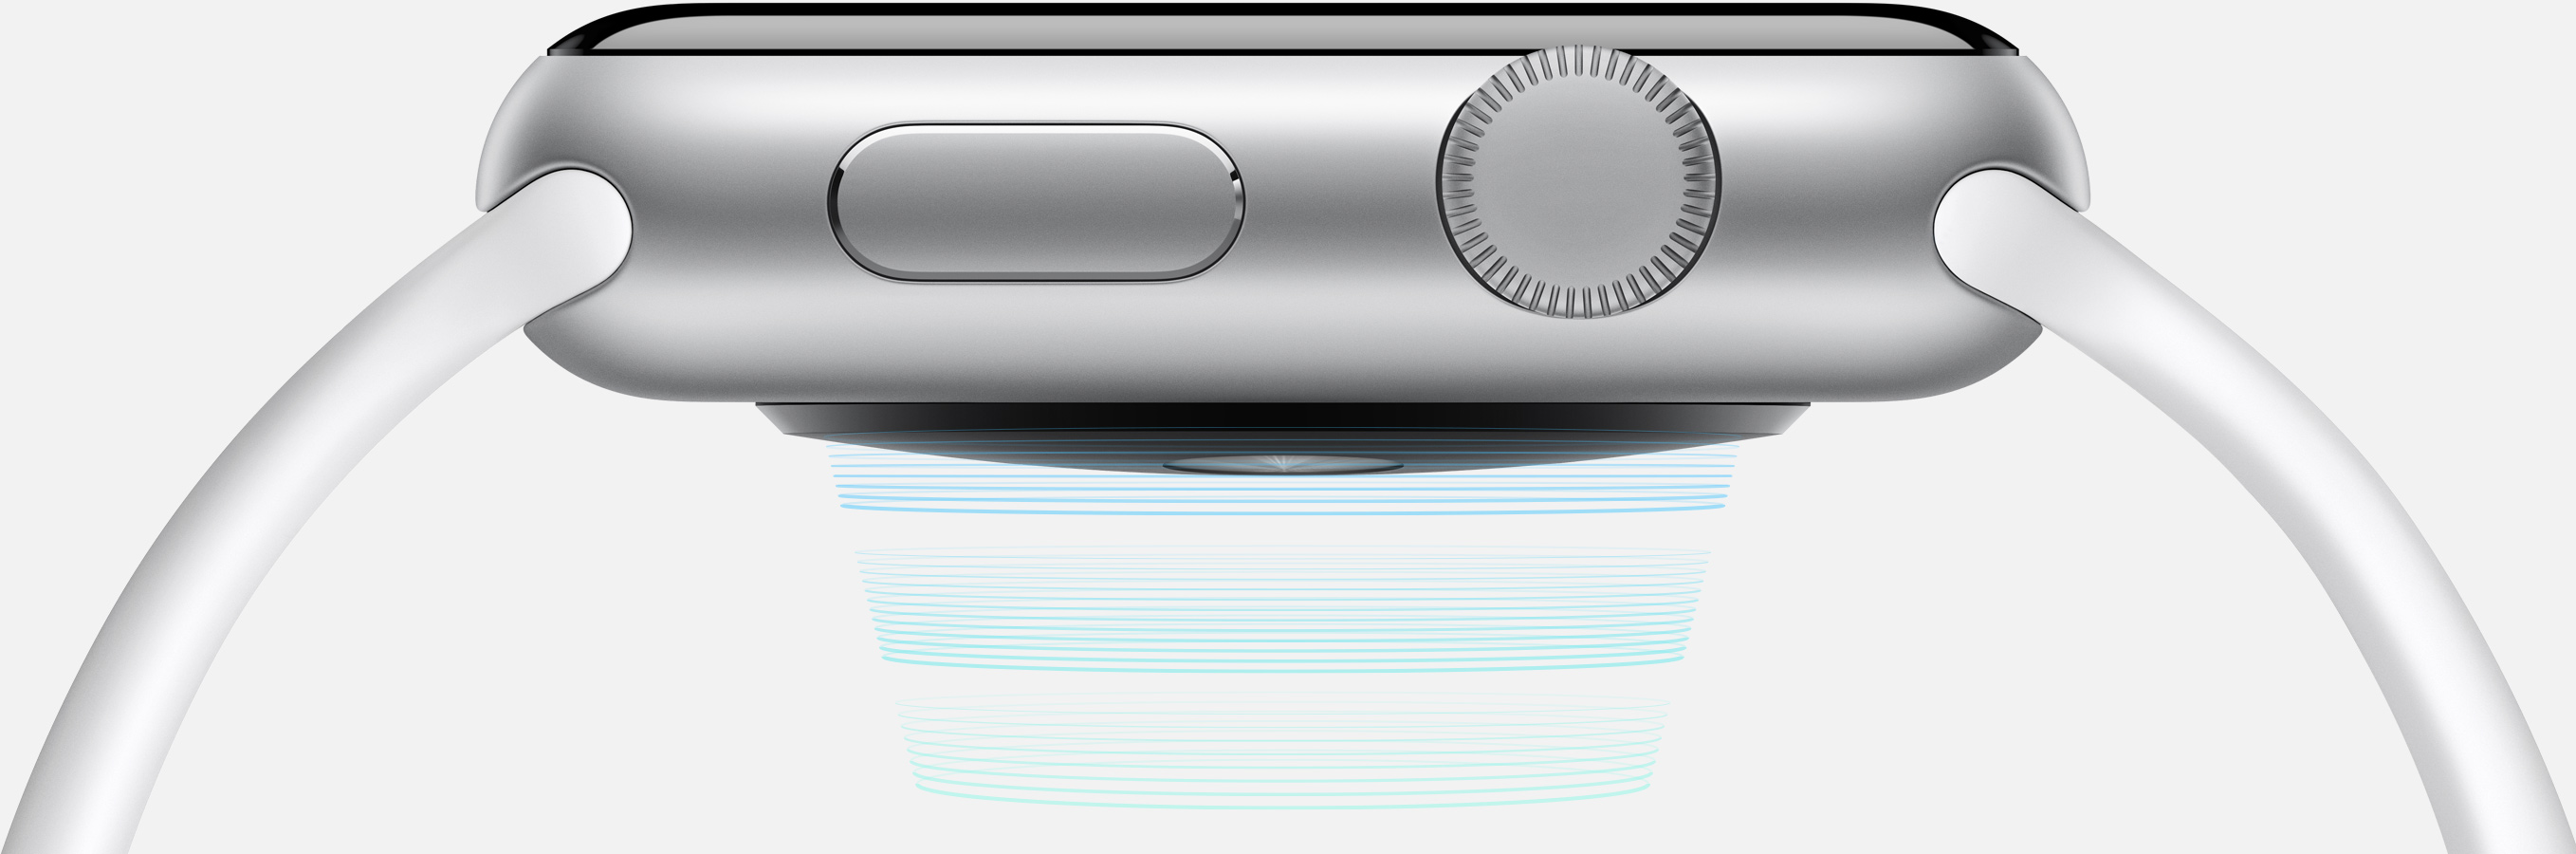 Taptic Engine в Apple Watch